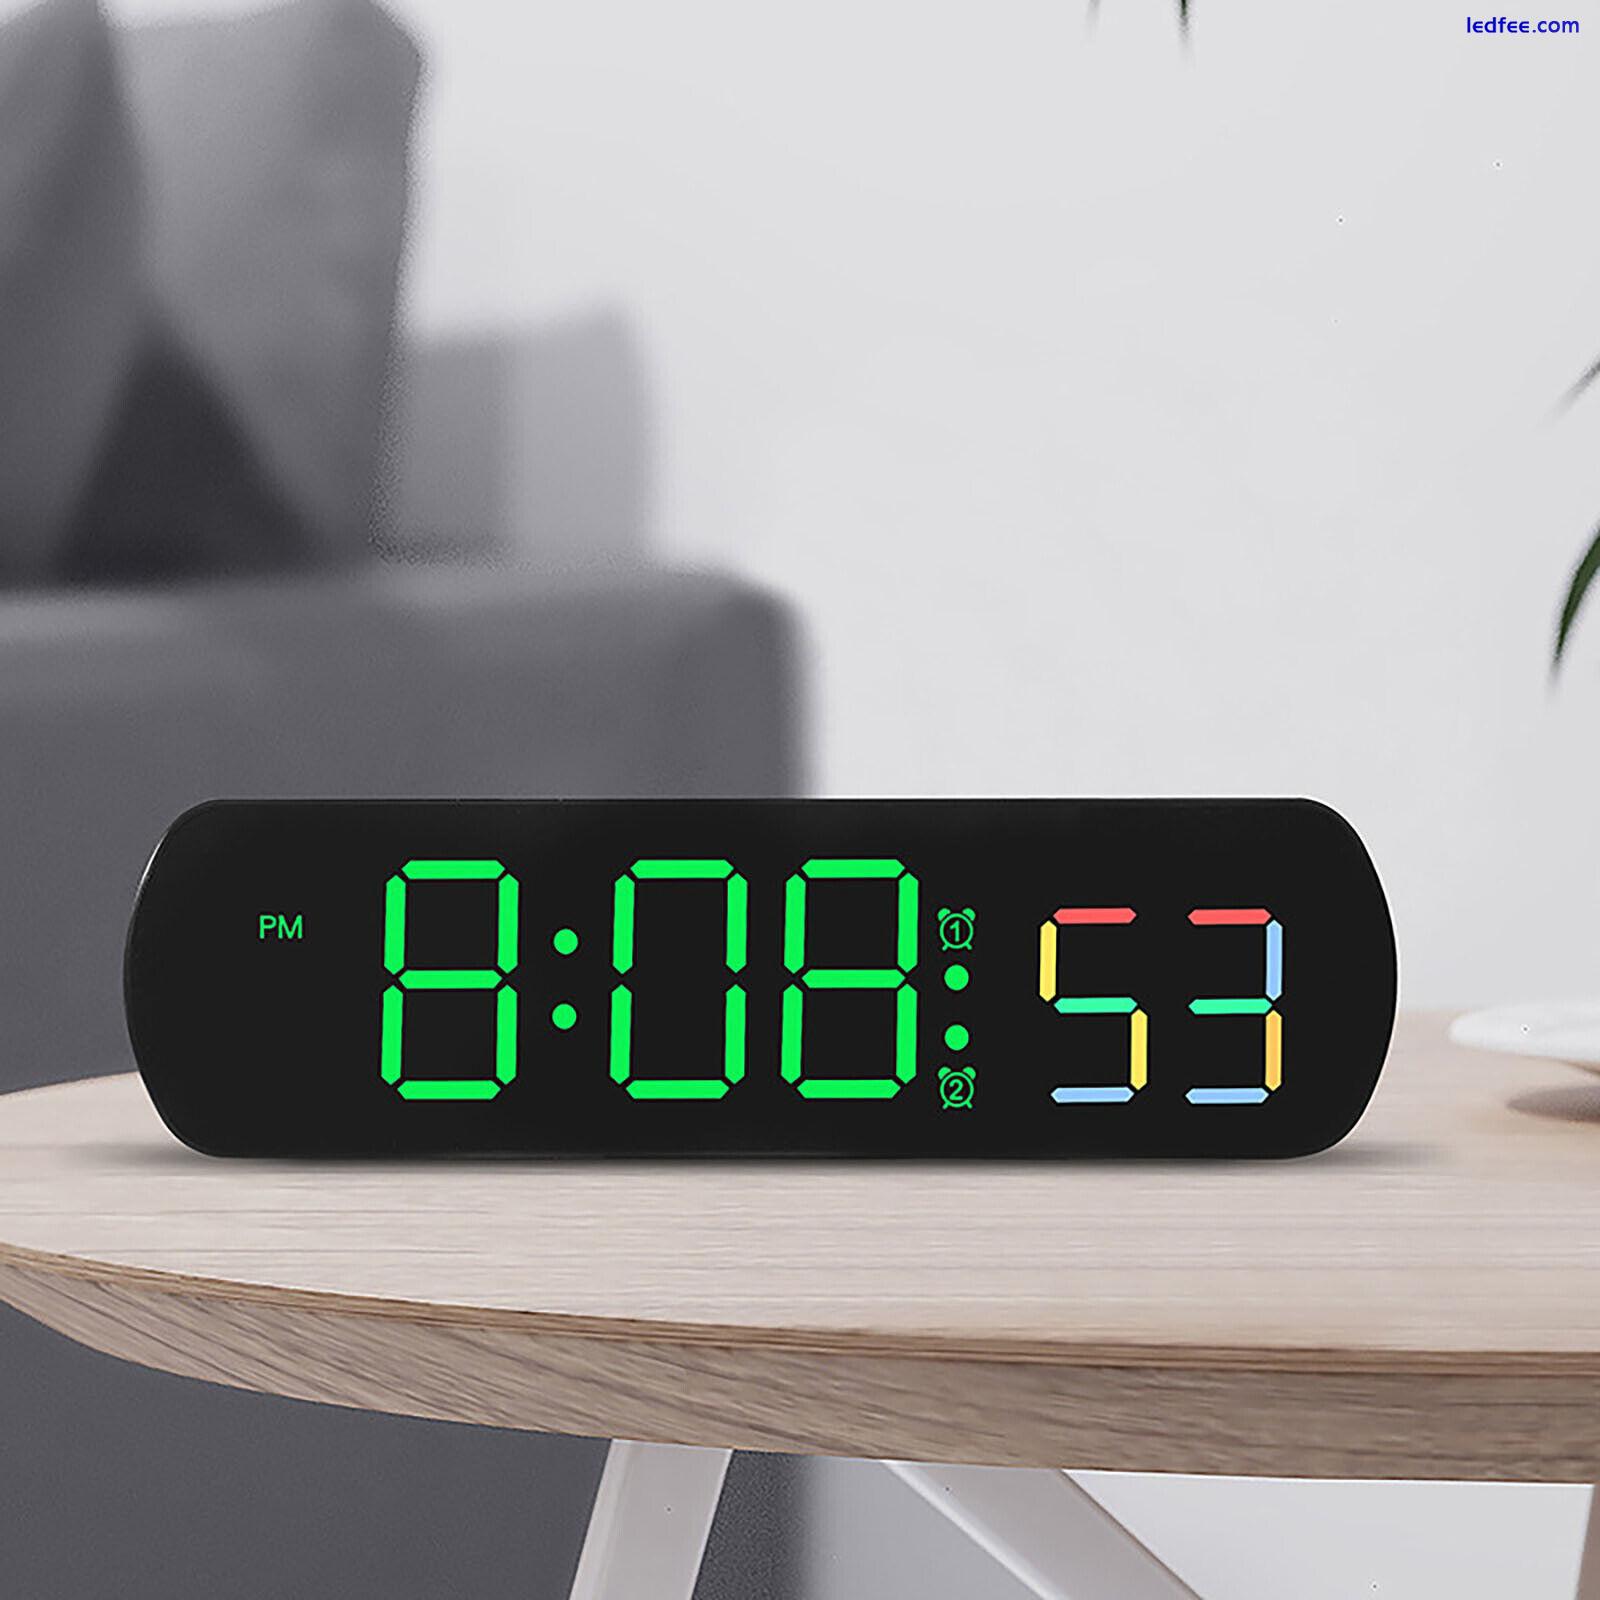 LED Electric Digital Alarm Clock with Temperature Date Display Bedside Clocks 3 